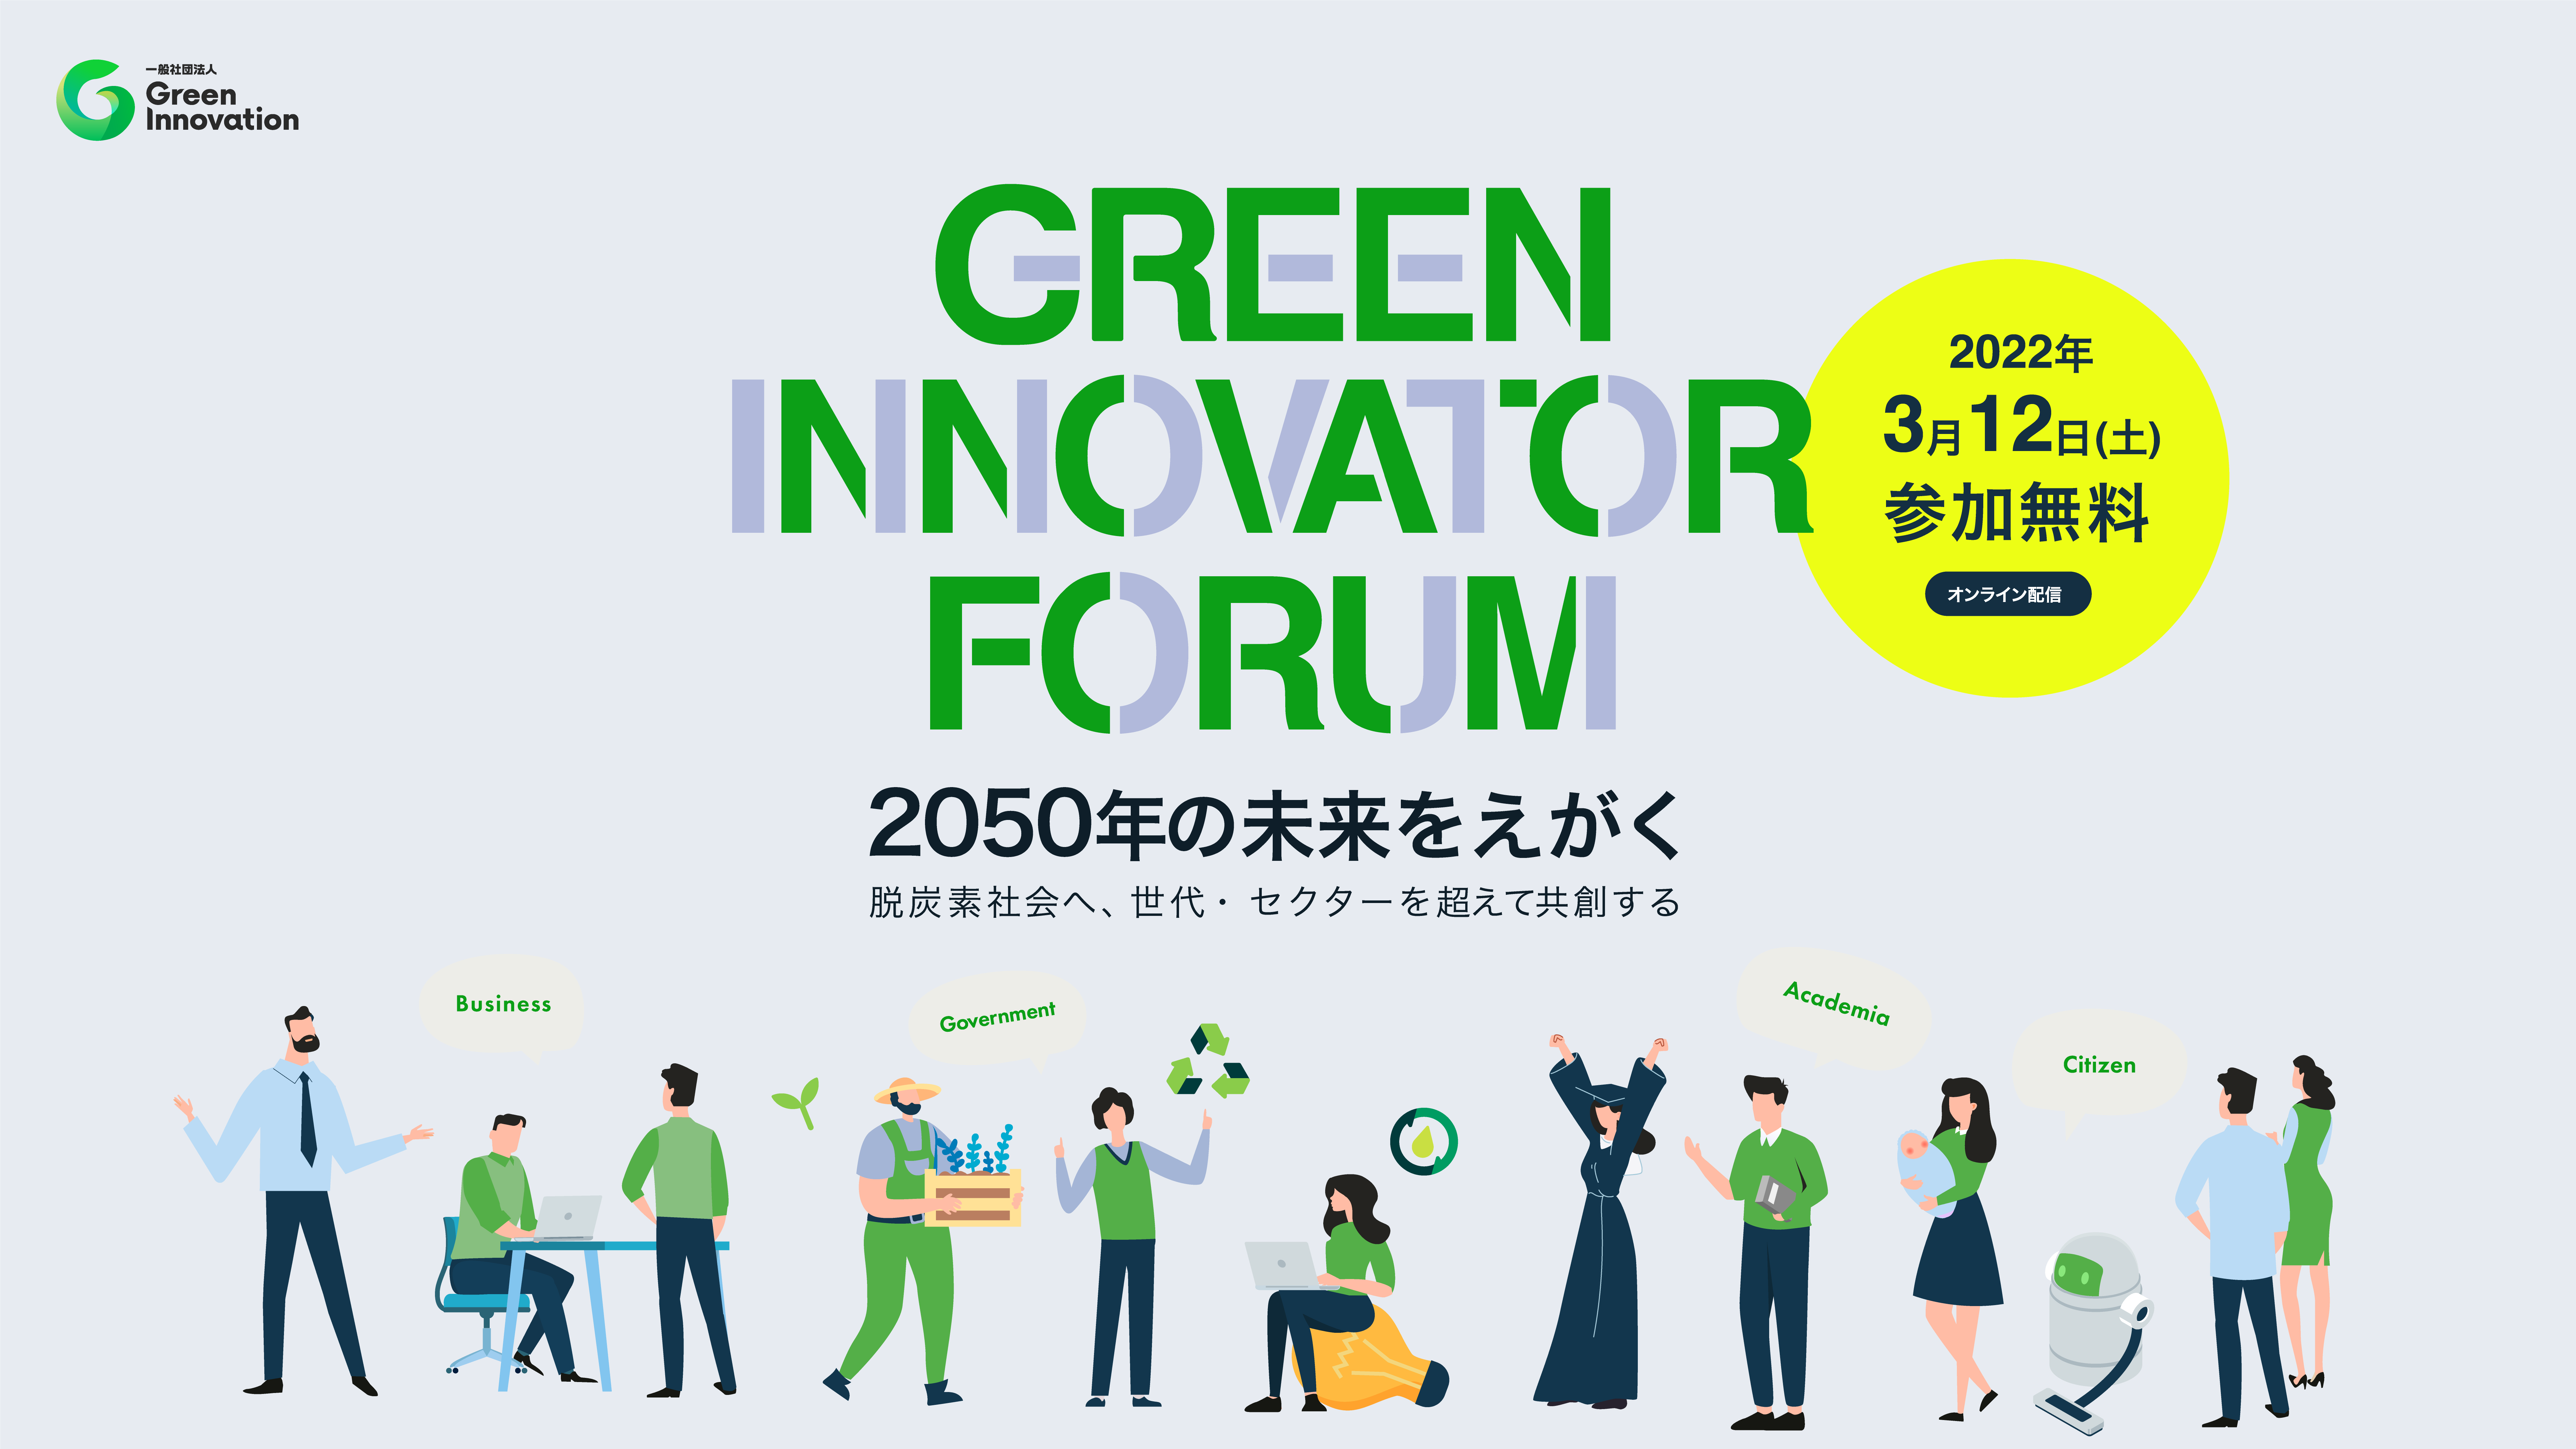 Green Innovator Forumを3月12日(土)に開催します　テーマは「2050年の脱炭素社会へ、世代・セクターを超えて共創する」